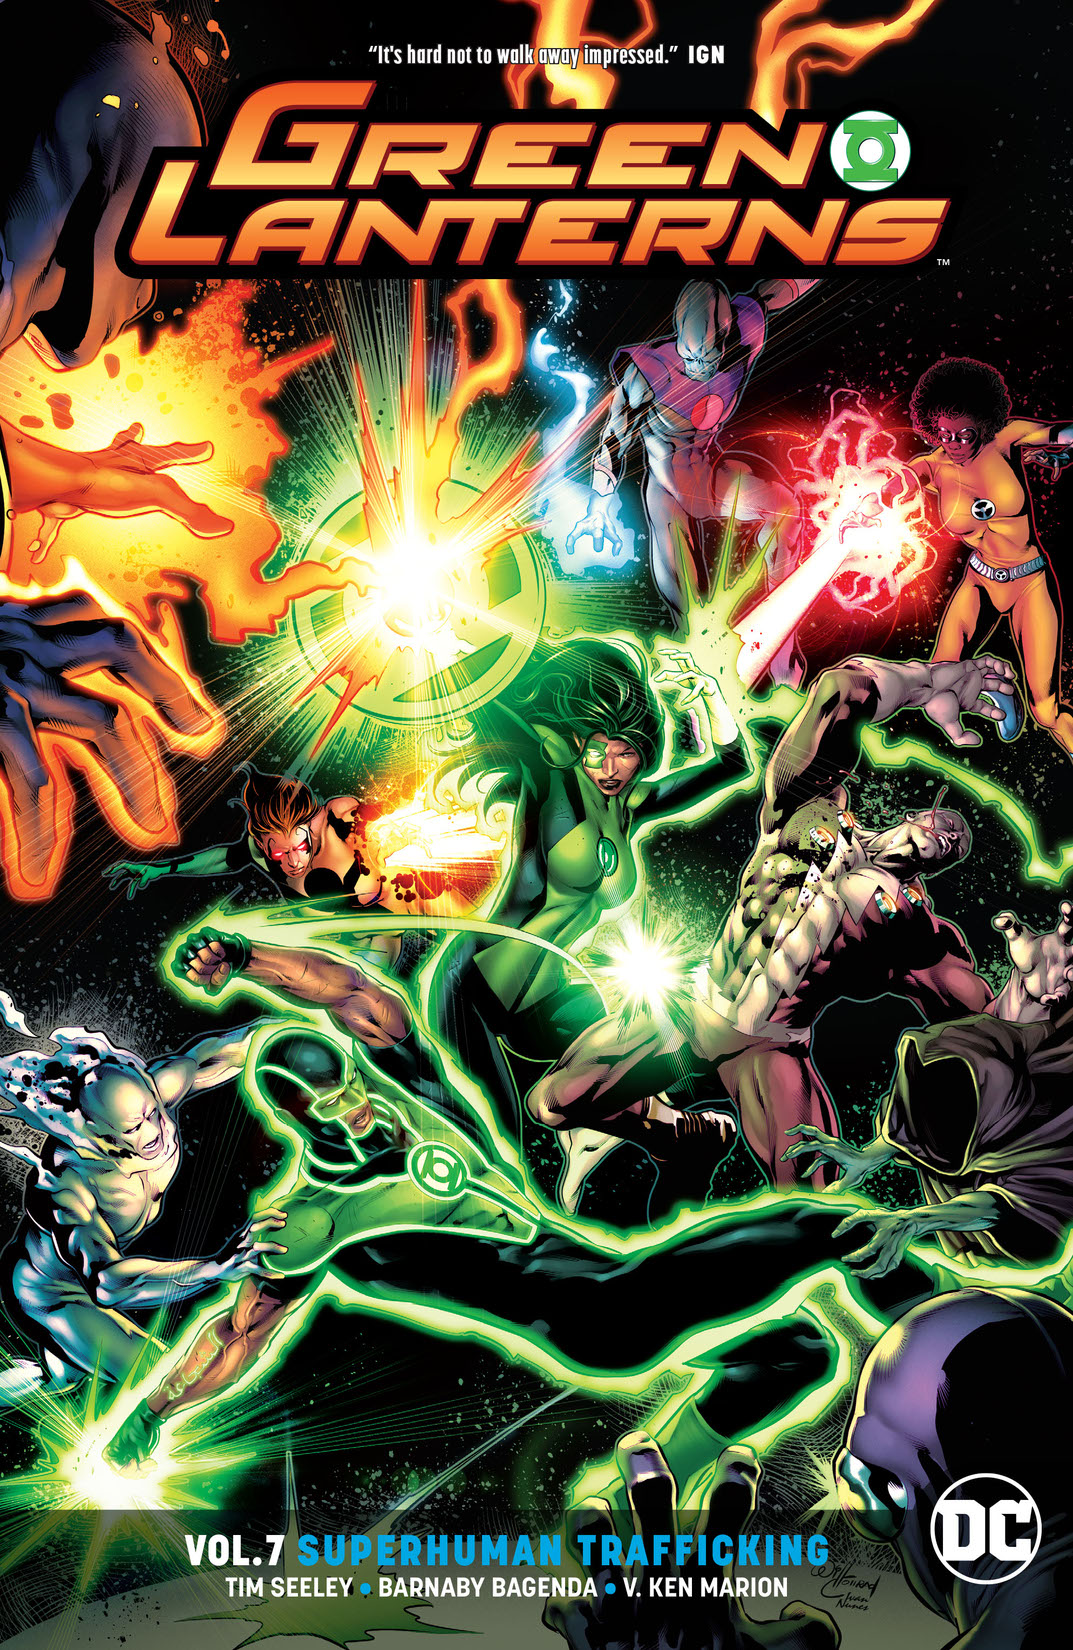 Green Lanterns Vol. 7: Superhuman Trafficking preview images